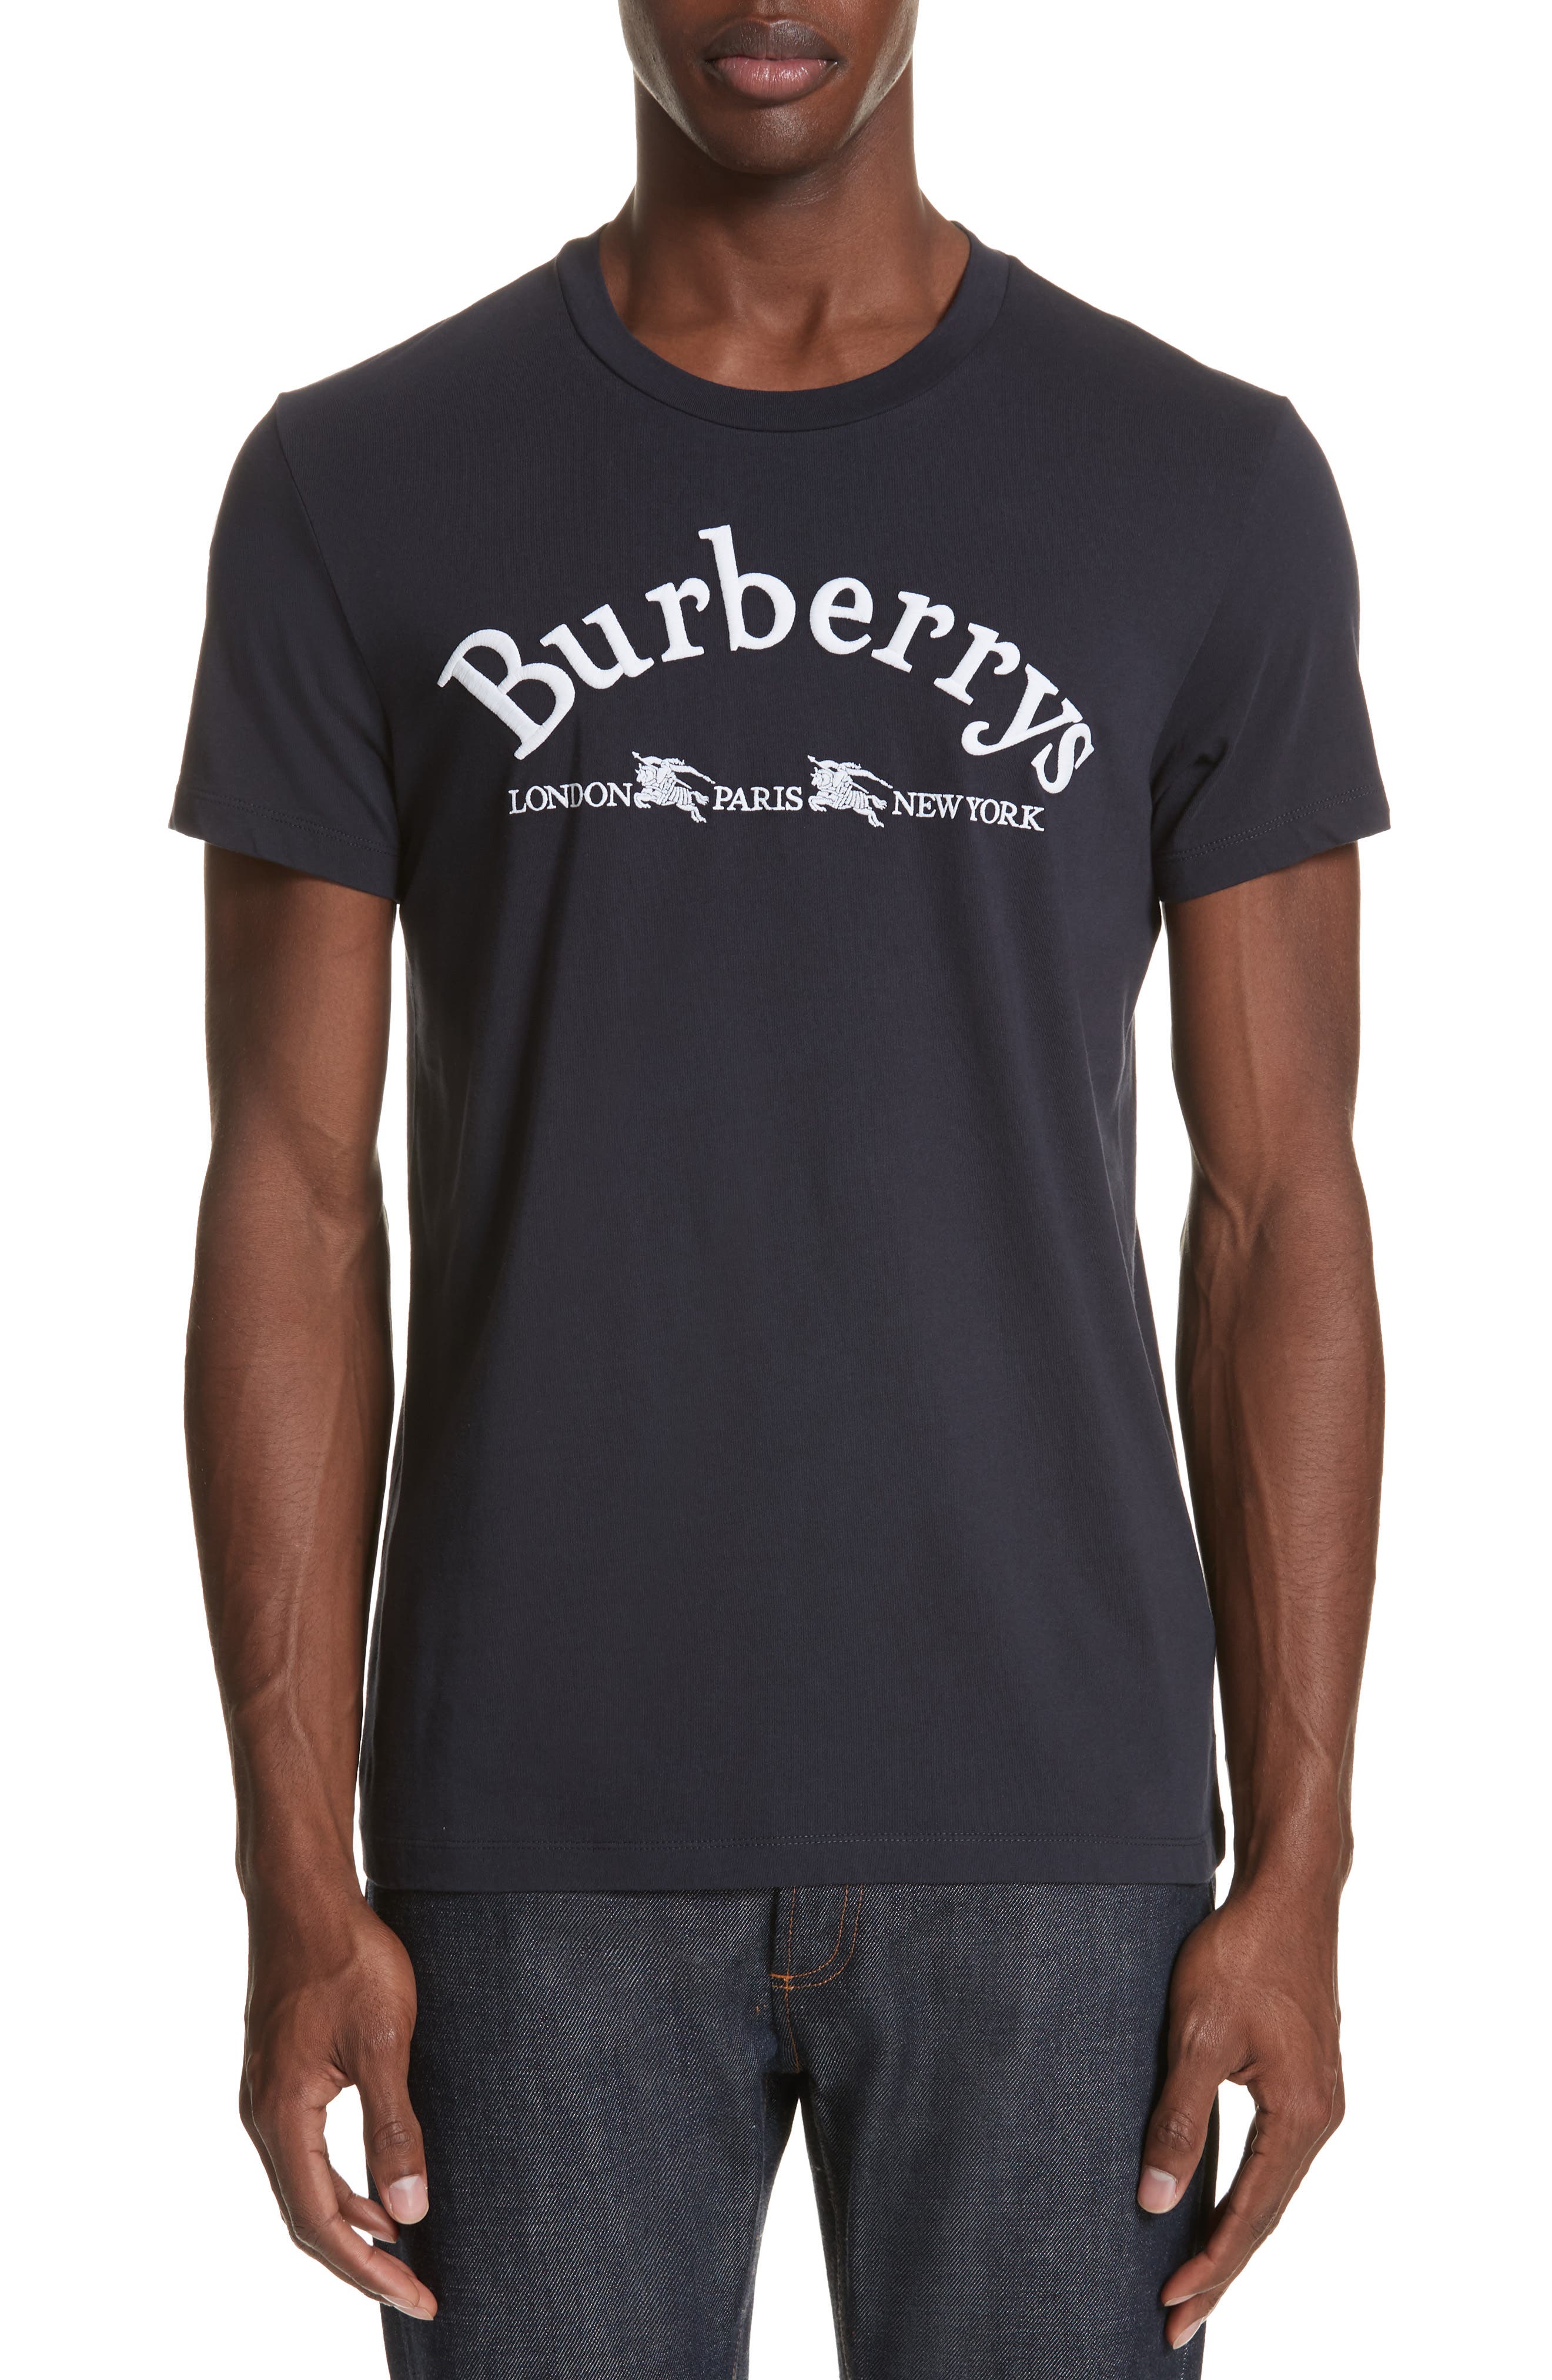 burberry mens t shirt nordstrom